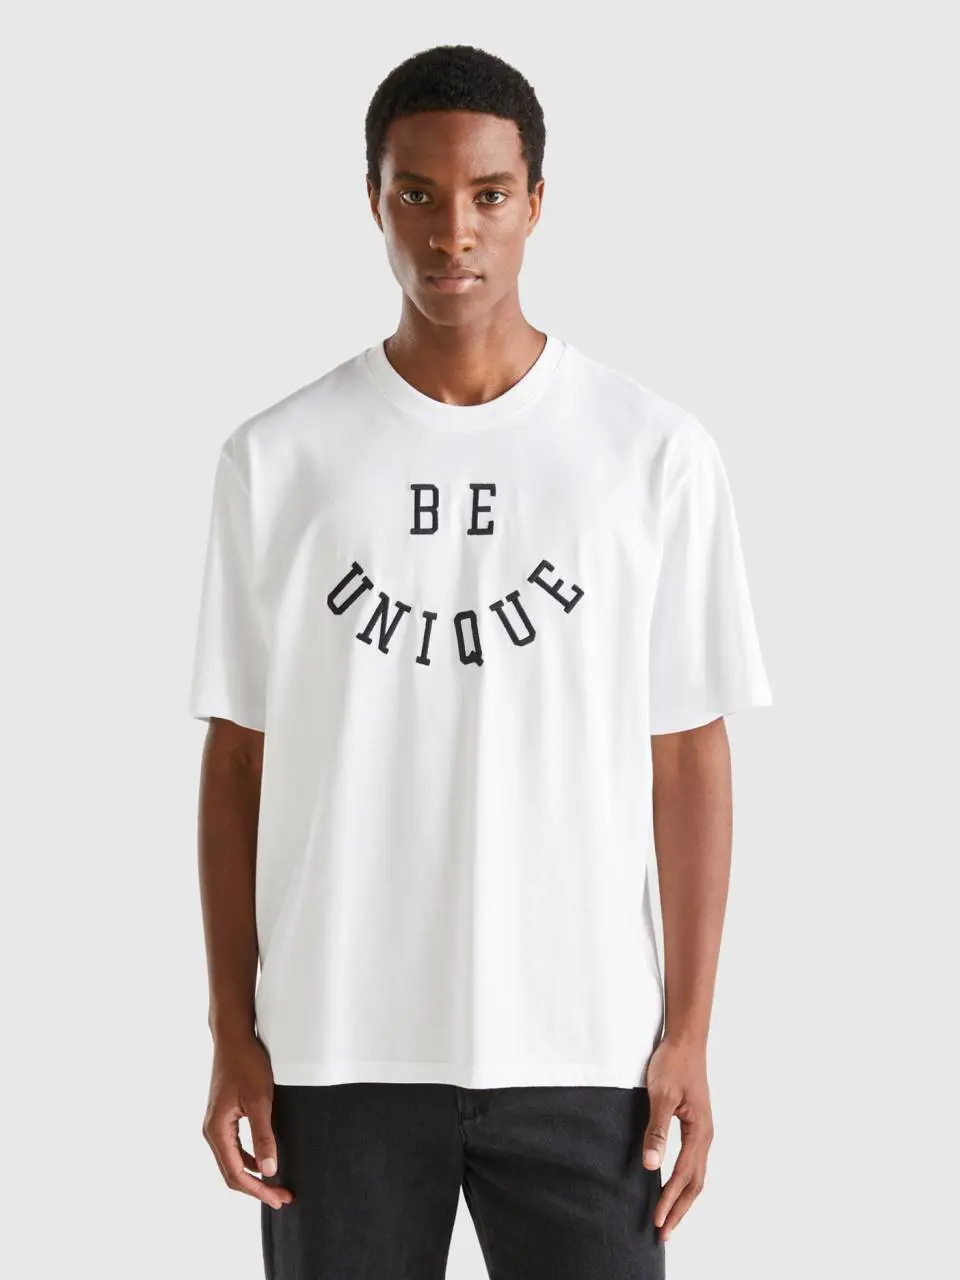 Benetton t-shirt with slogan print. 1